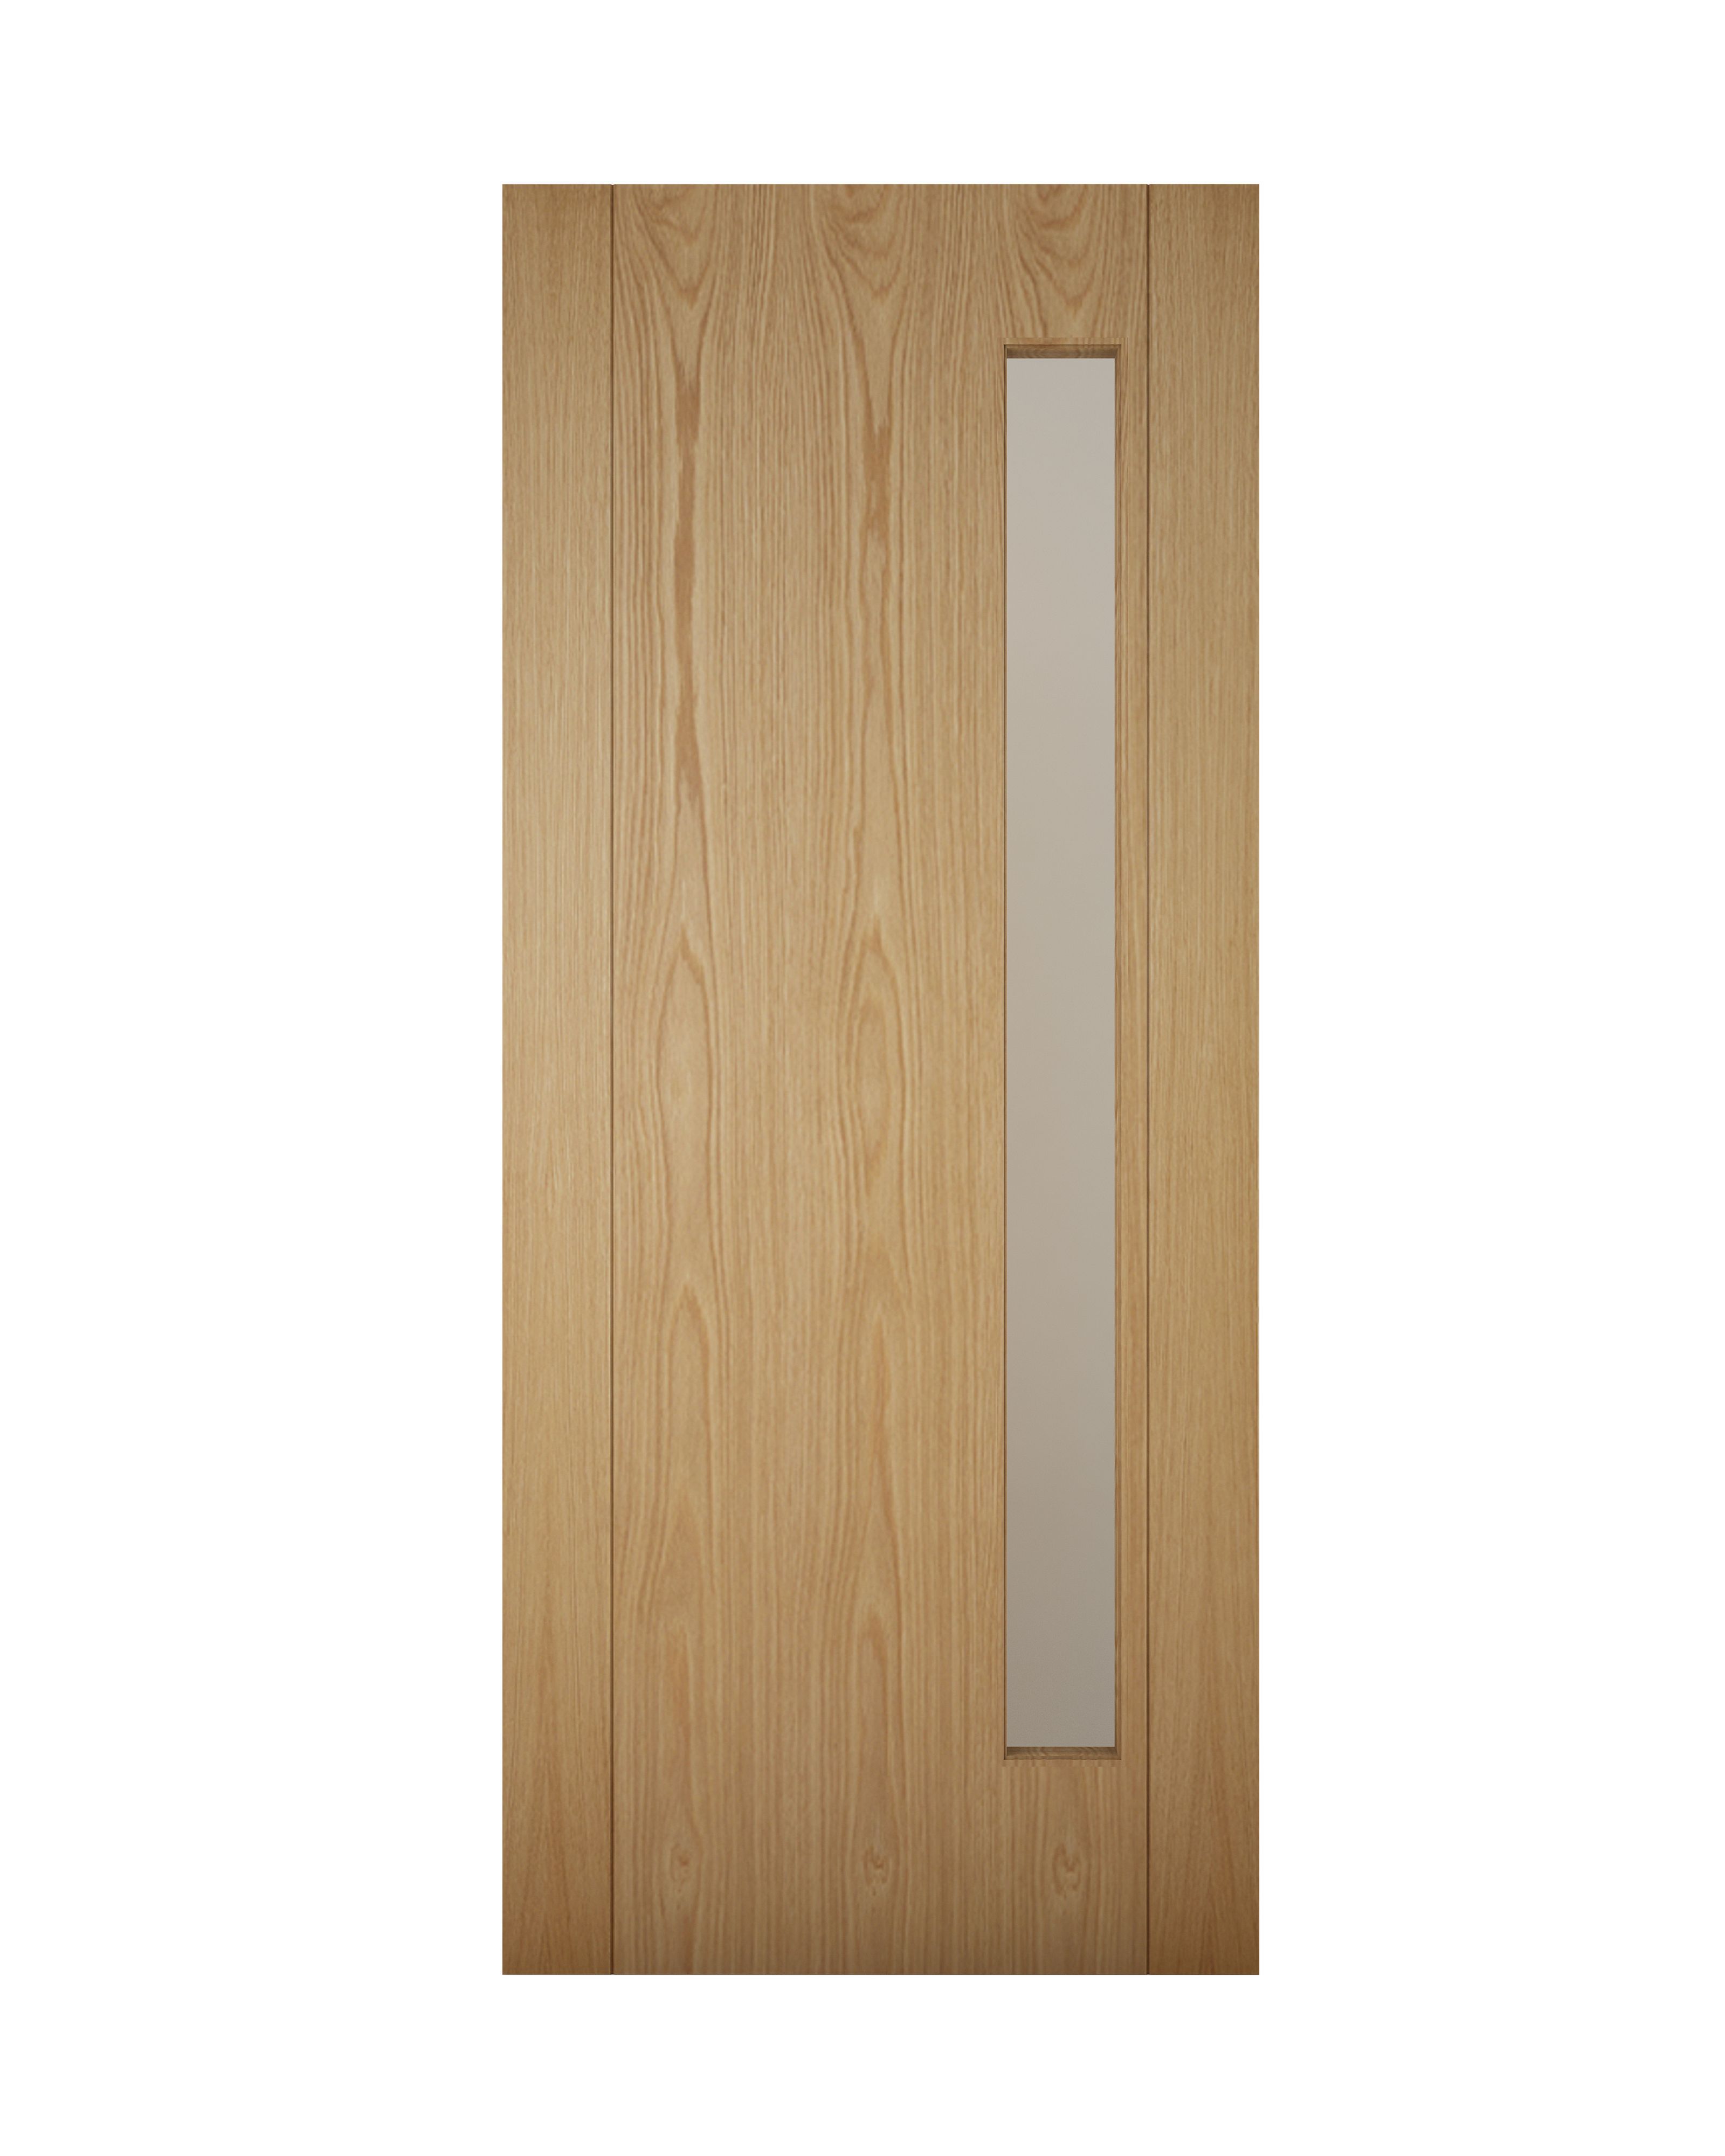 Glazed Contemporary White oak veneer Left & RHed Front Door, (H)1981mm (W)838mm